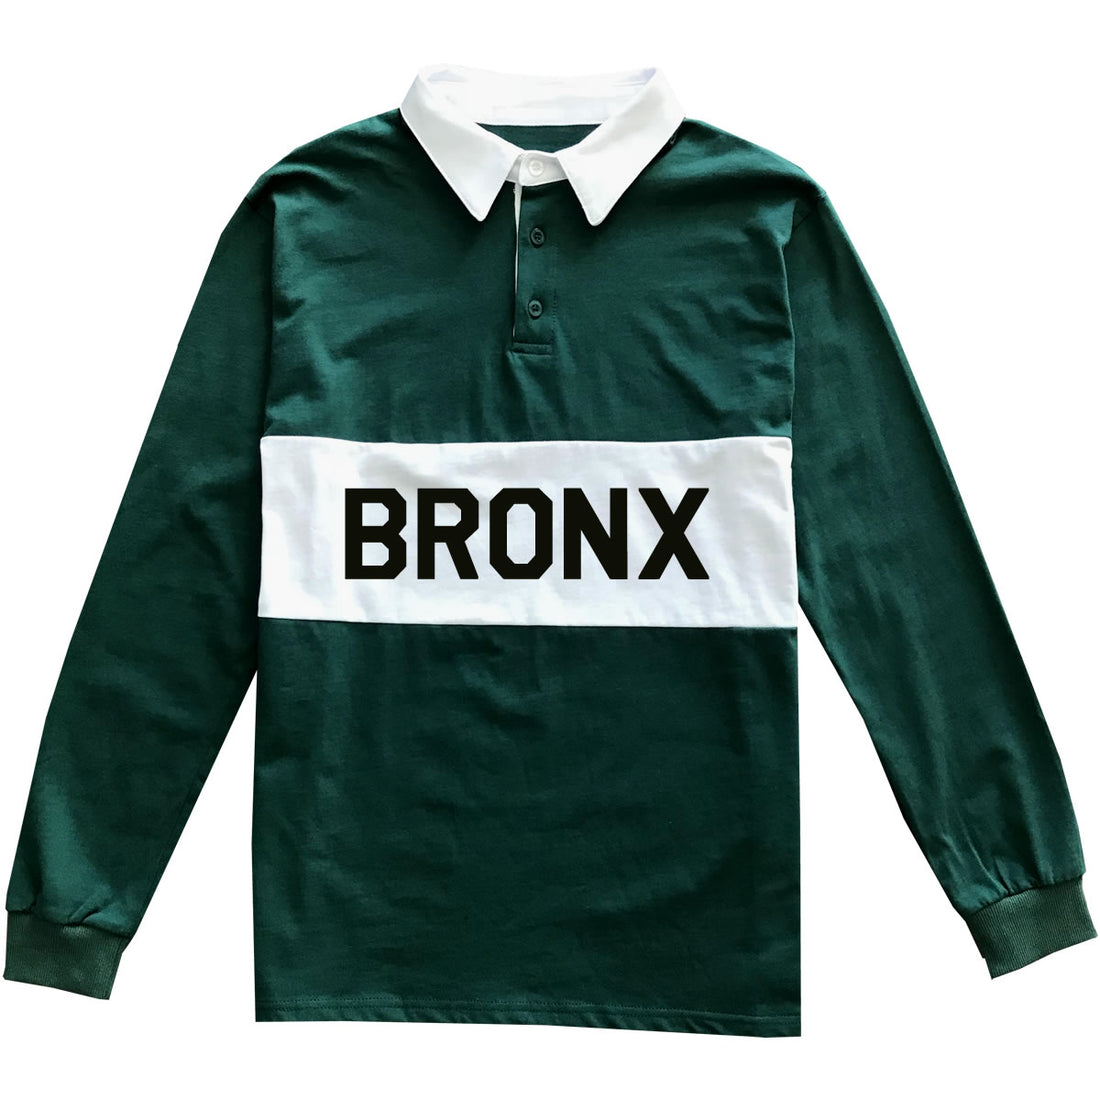 The Bronx New York Striped Mens Long Sleeve Rugby Shirt Green